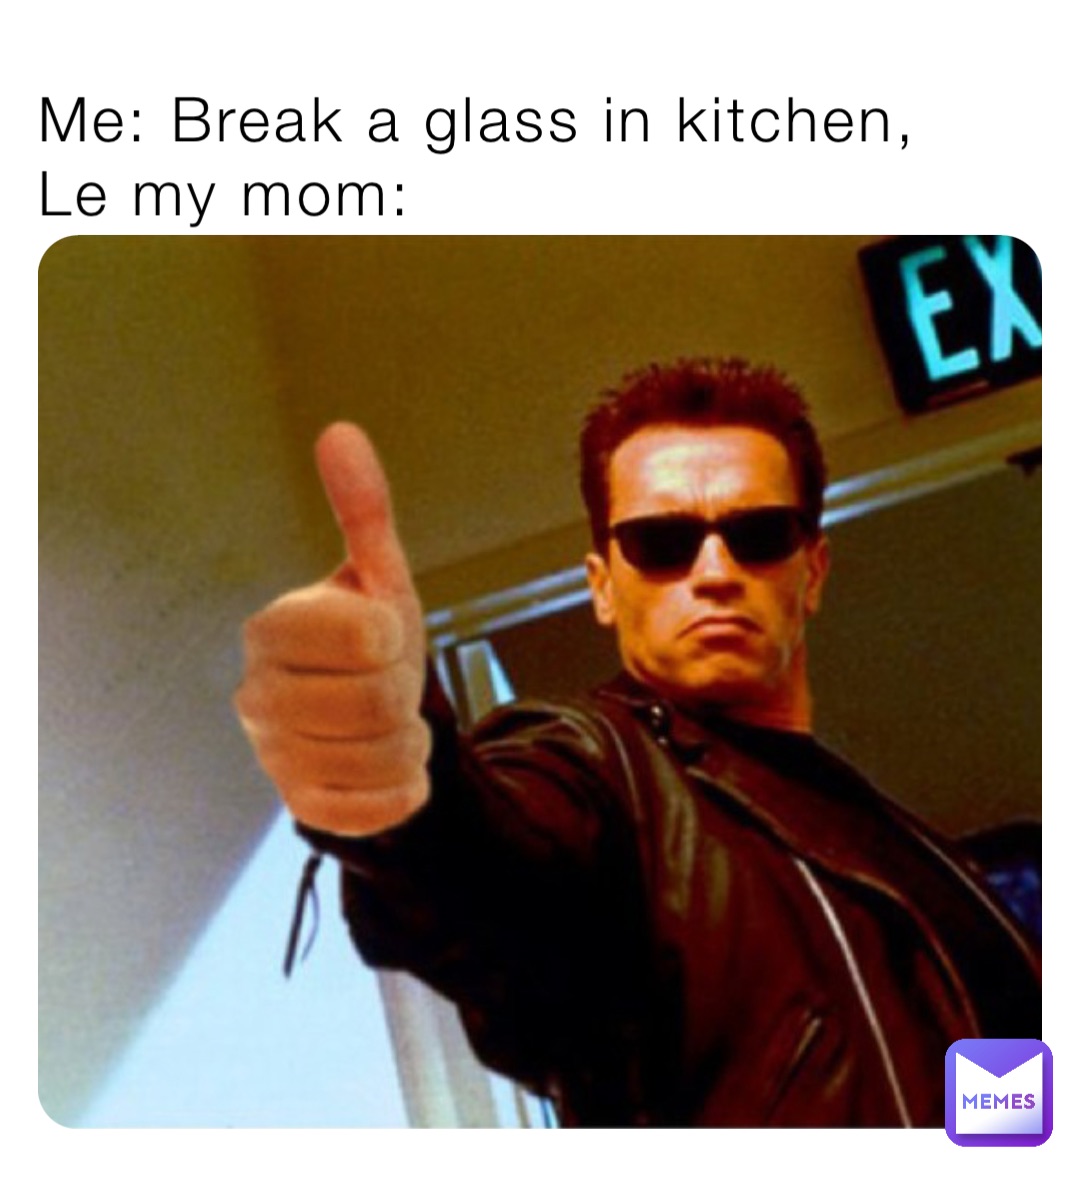 Me: Break a glass in kitchen,
Le my mom: